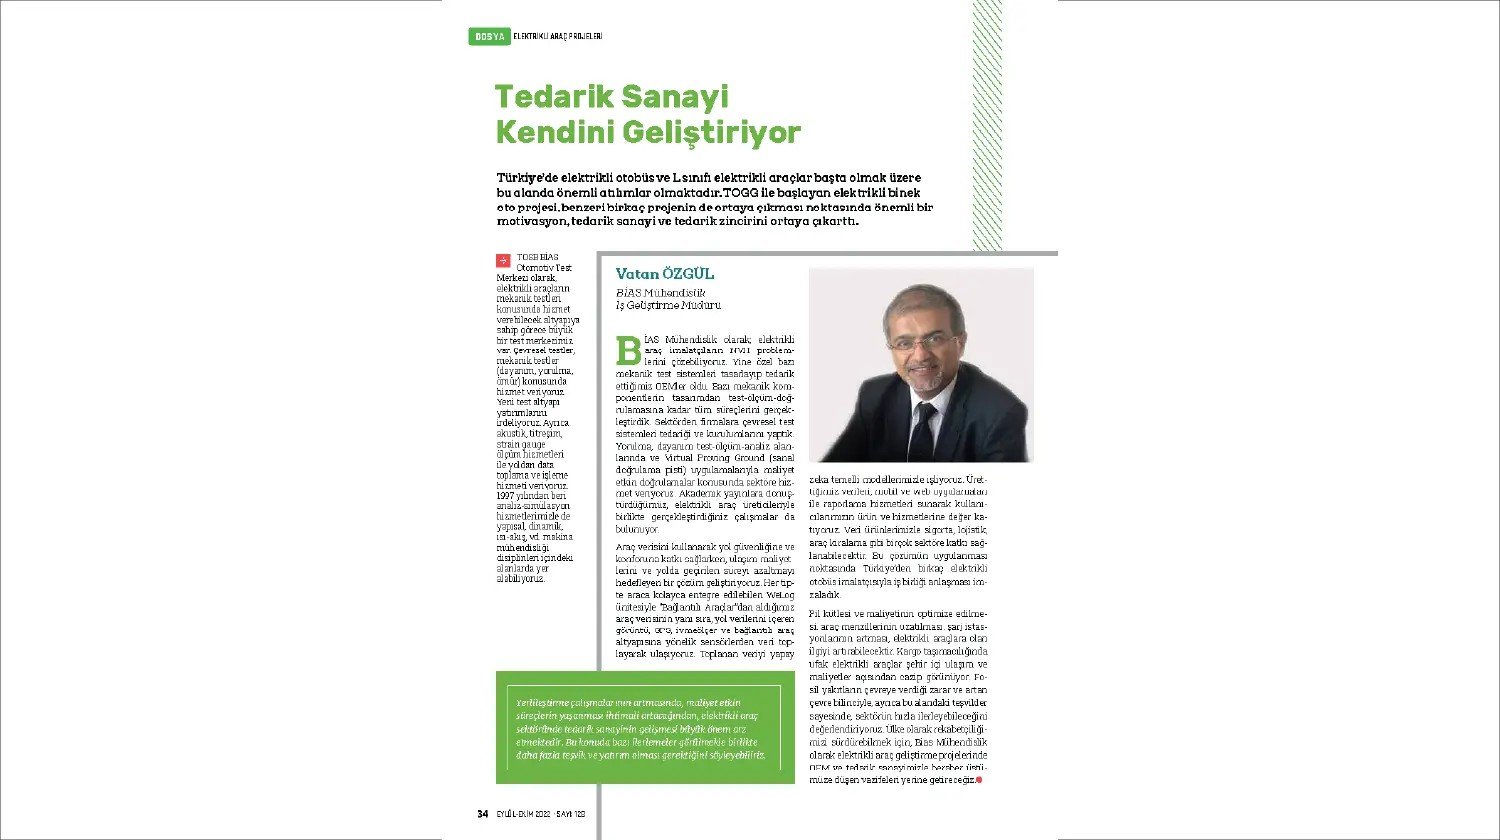 Our Business Development Manager Vatan Özgül's Interview Published in TAYSAD Magazine